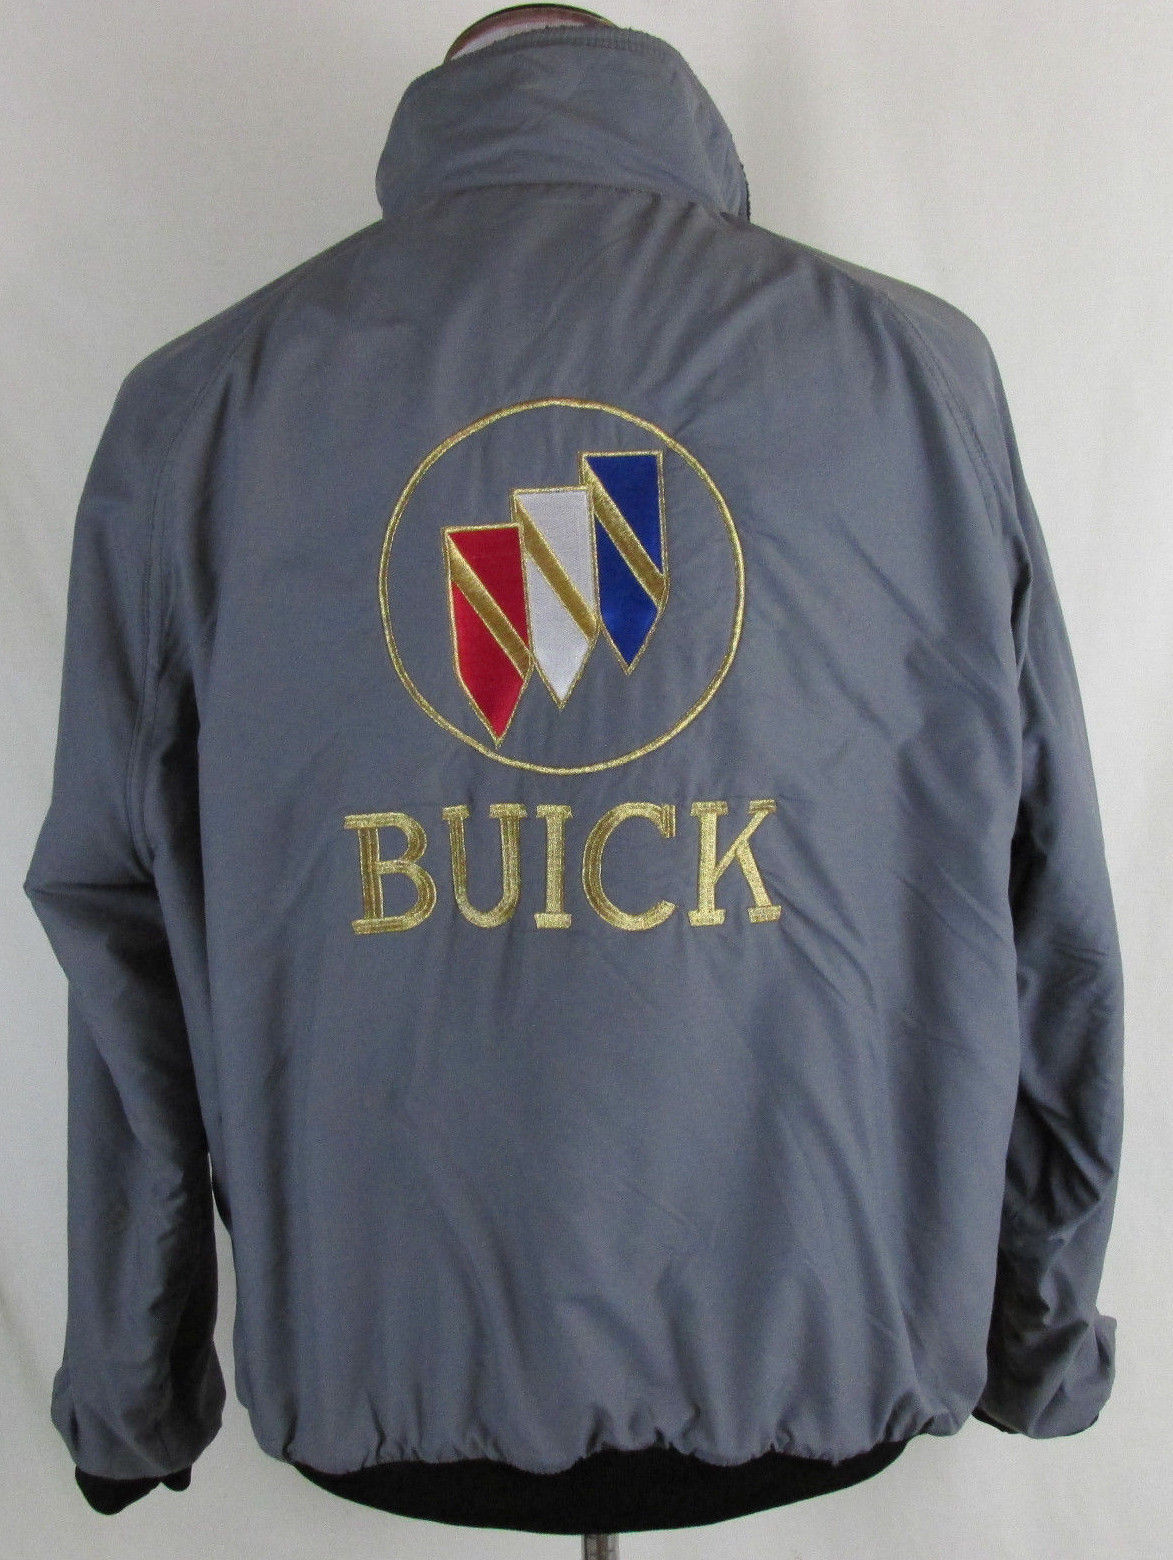 Buick Coat Jacket Overalls